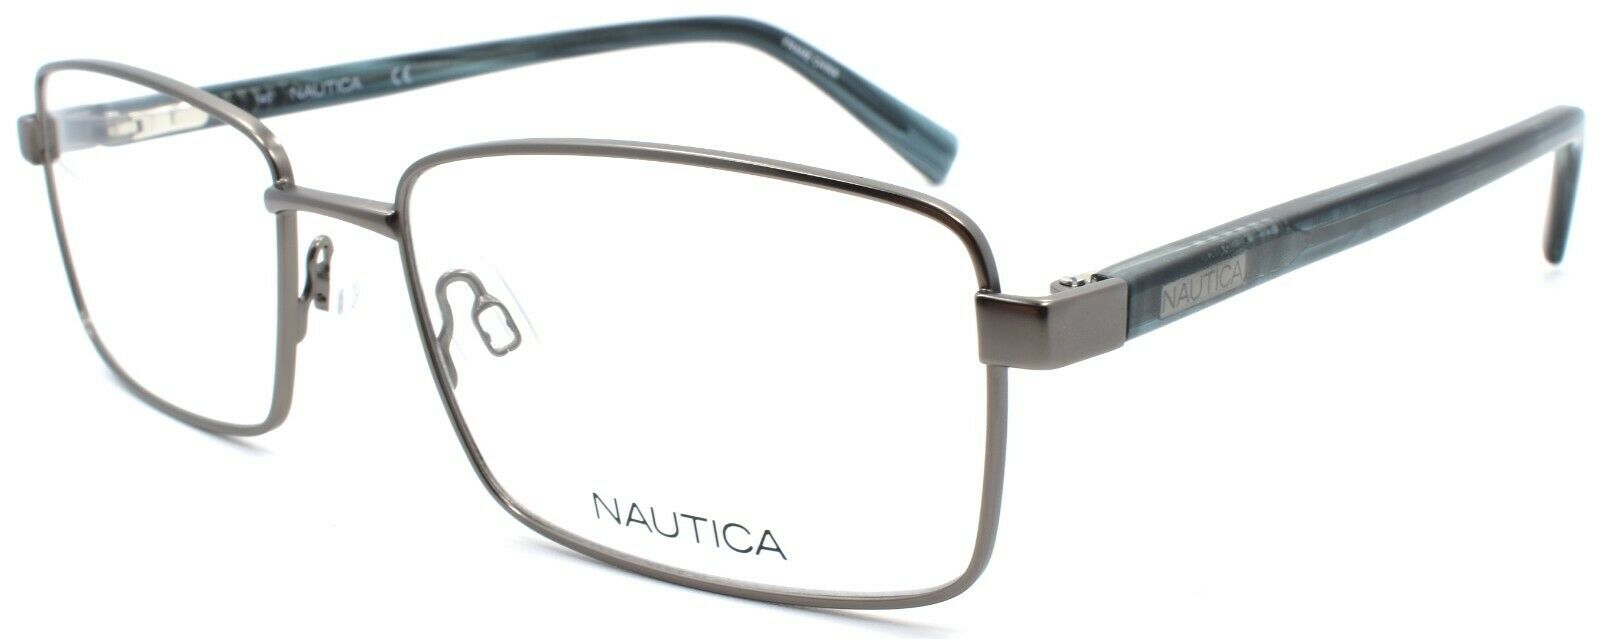 1-Nautica N7300 030 Men's Eyeglasses Frames 55-18-140 Satin Gunmetal-688940462982-IKSpecs